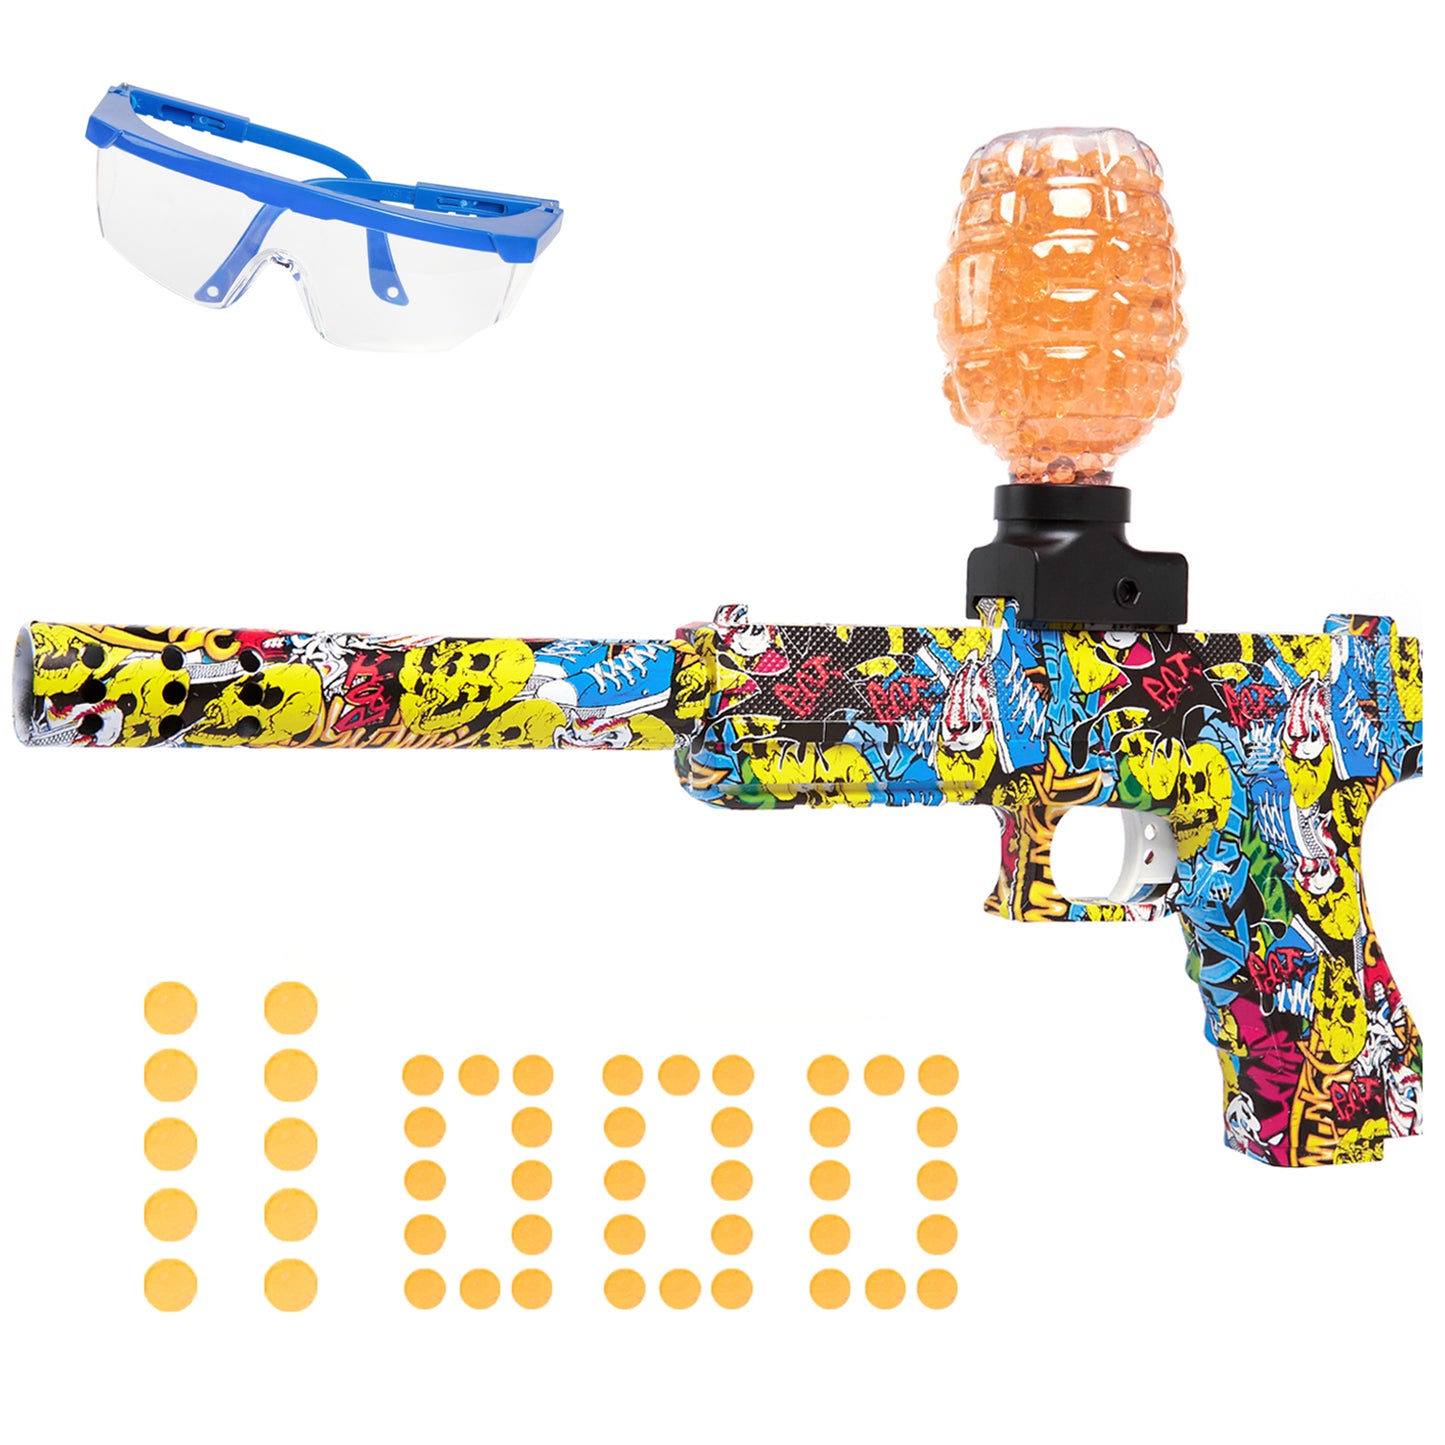 Splatter  Gel Ball Blaster Toy, with 11000 Non-Toxic Gellets